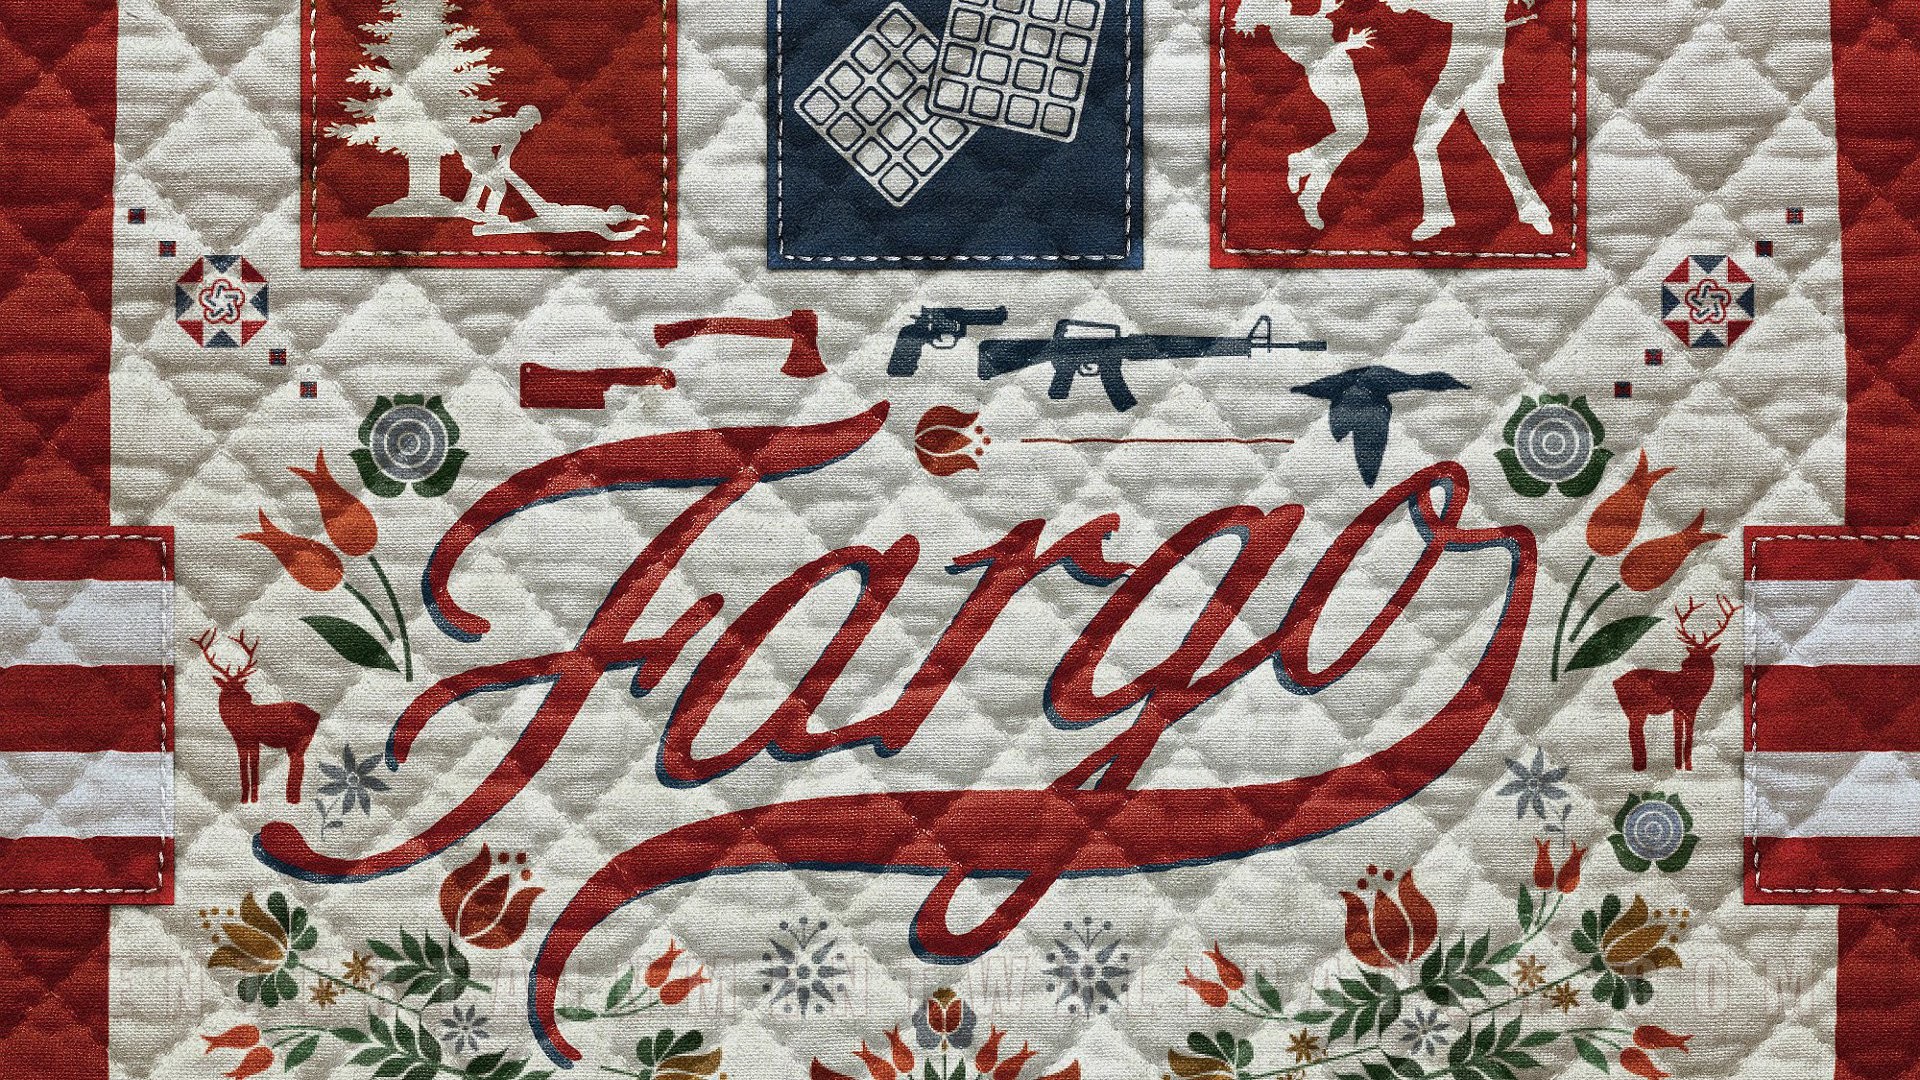 1920x1080 Fargo Wallpaper - Original size, download now.